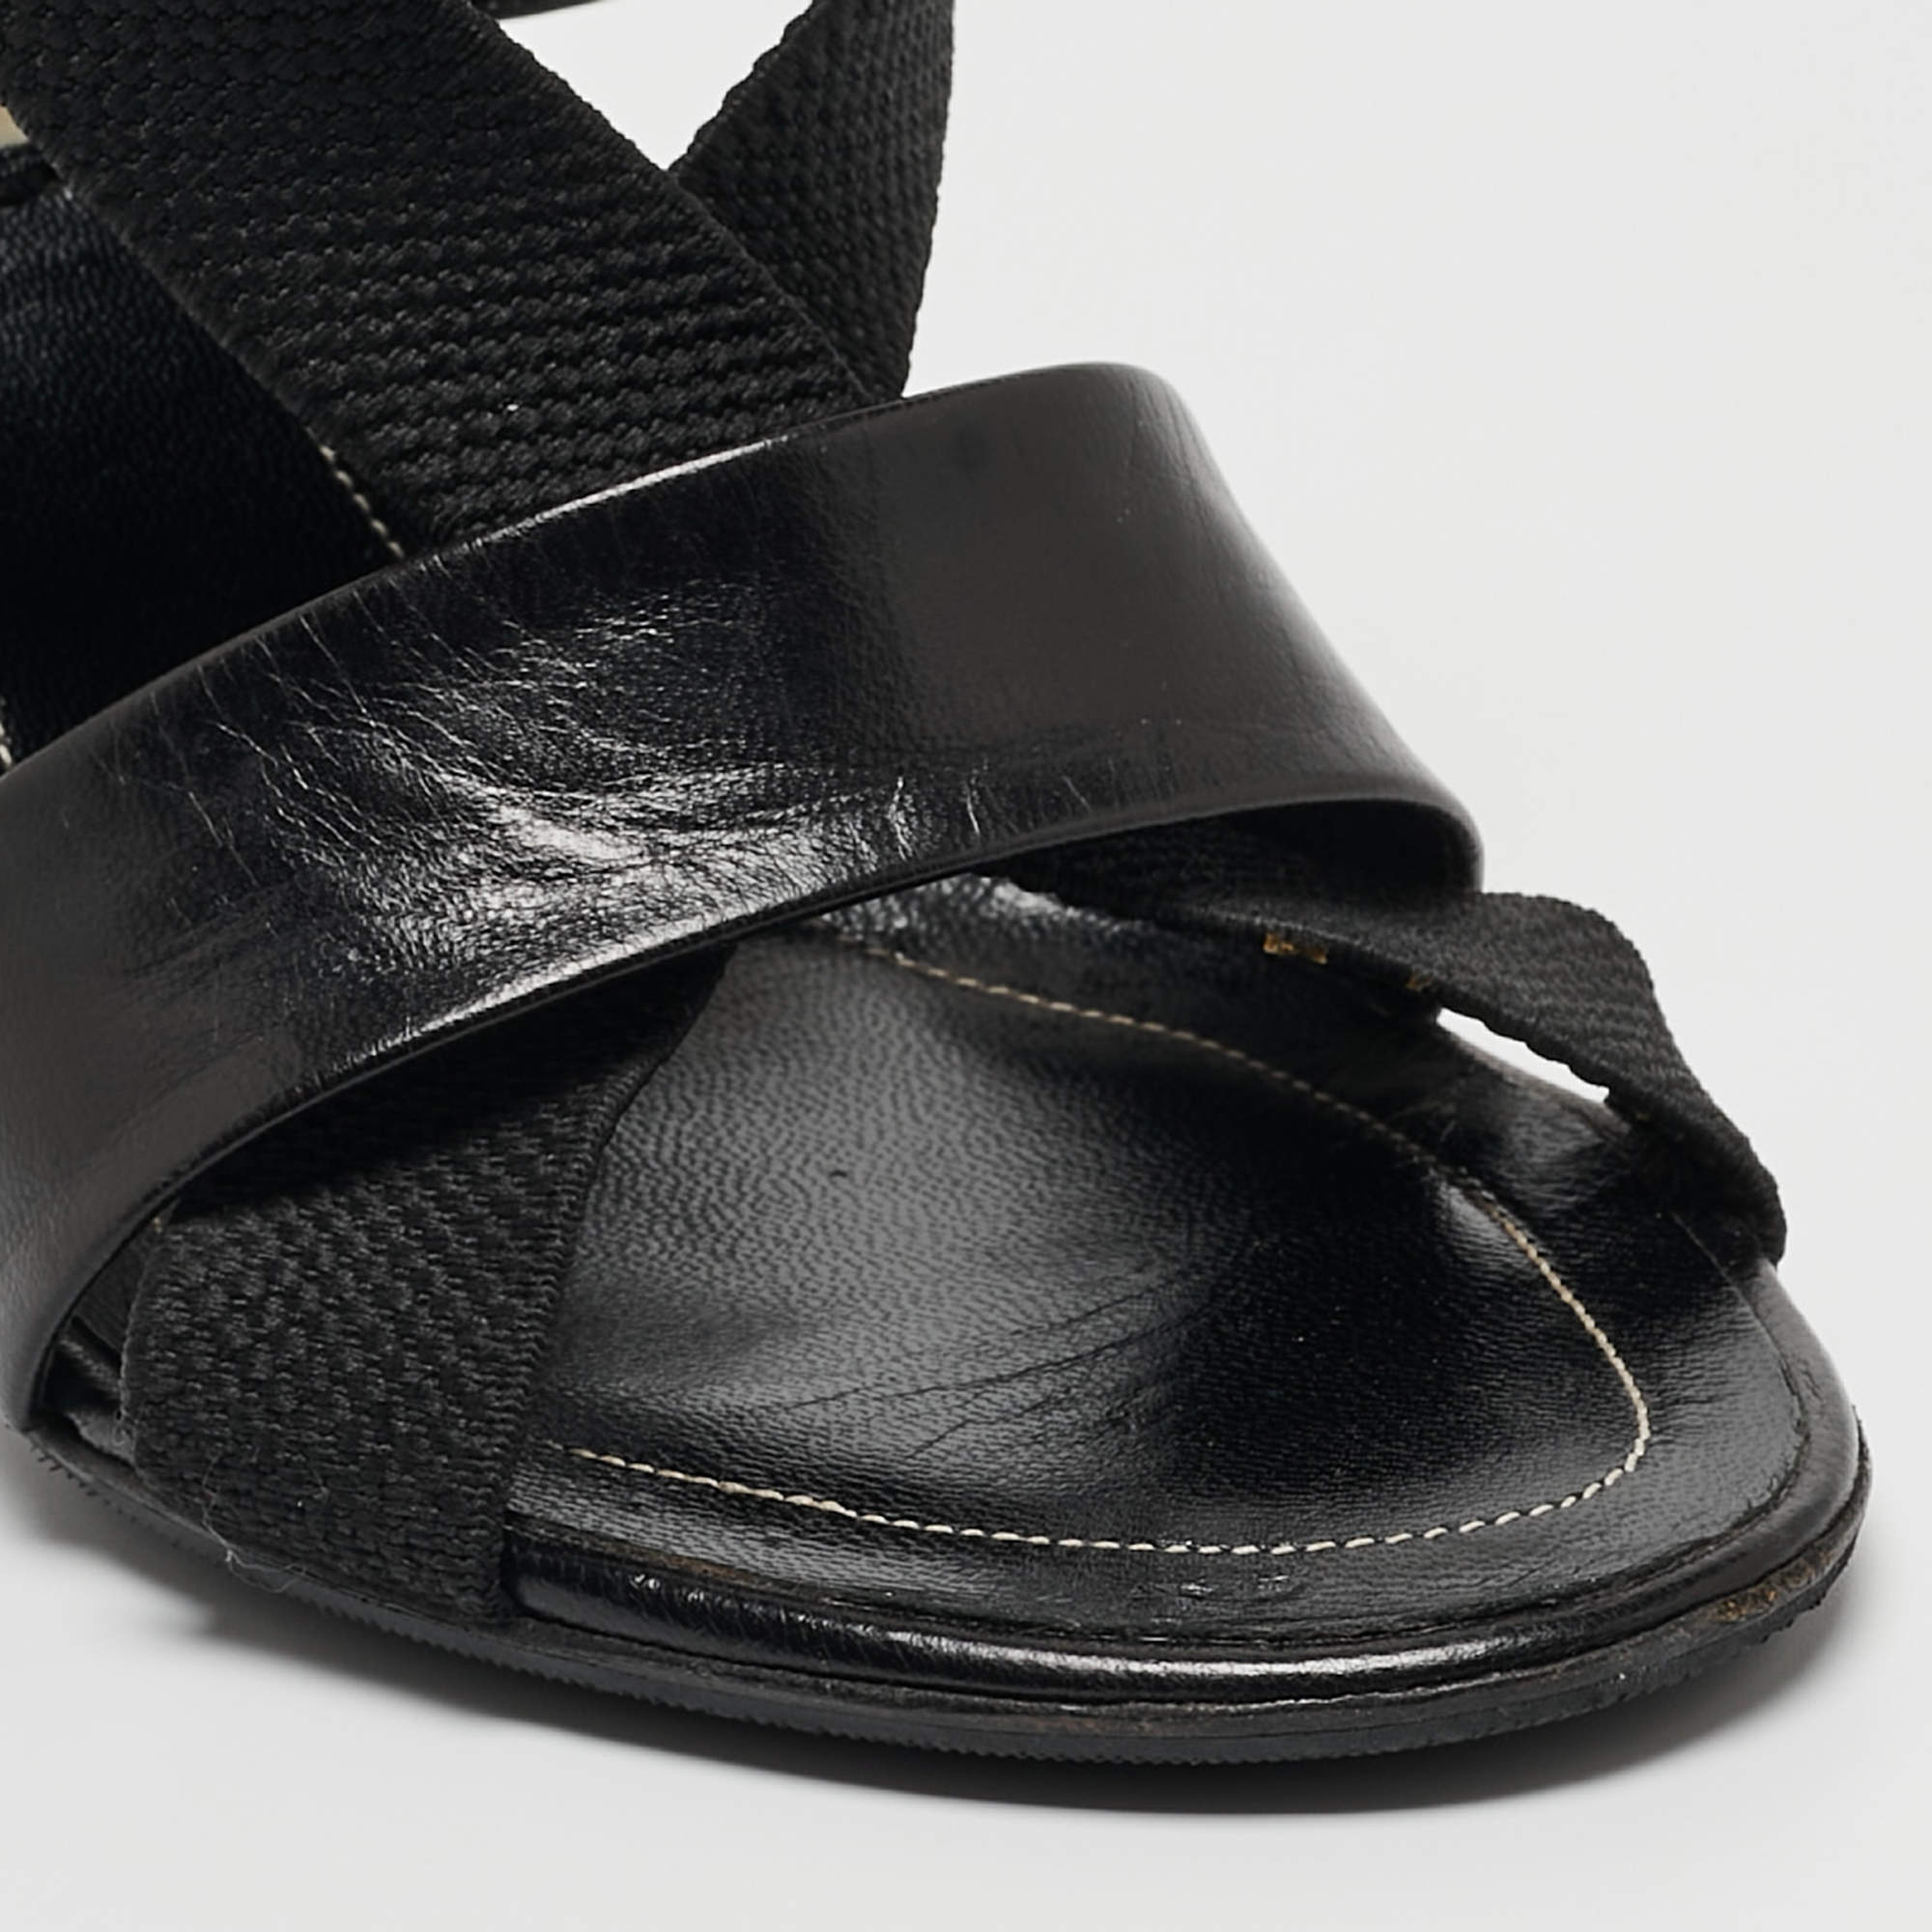 Balenciaga Elastic Crisscross Slingback Sandals in Black Leather